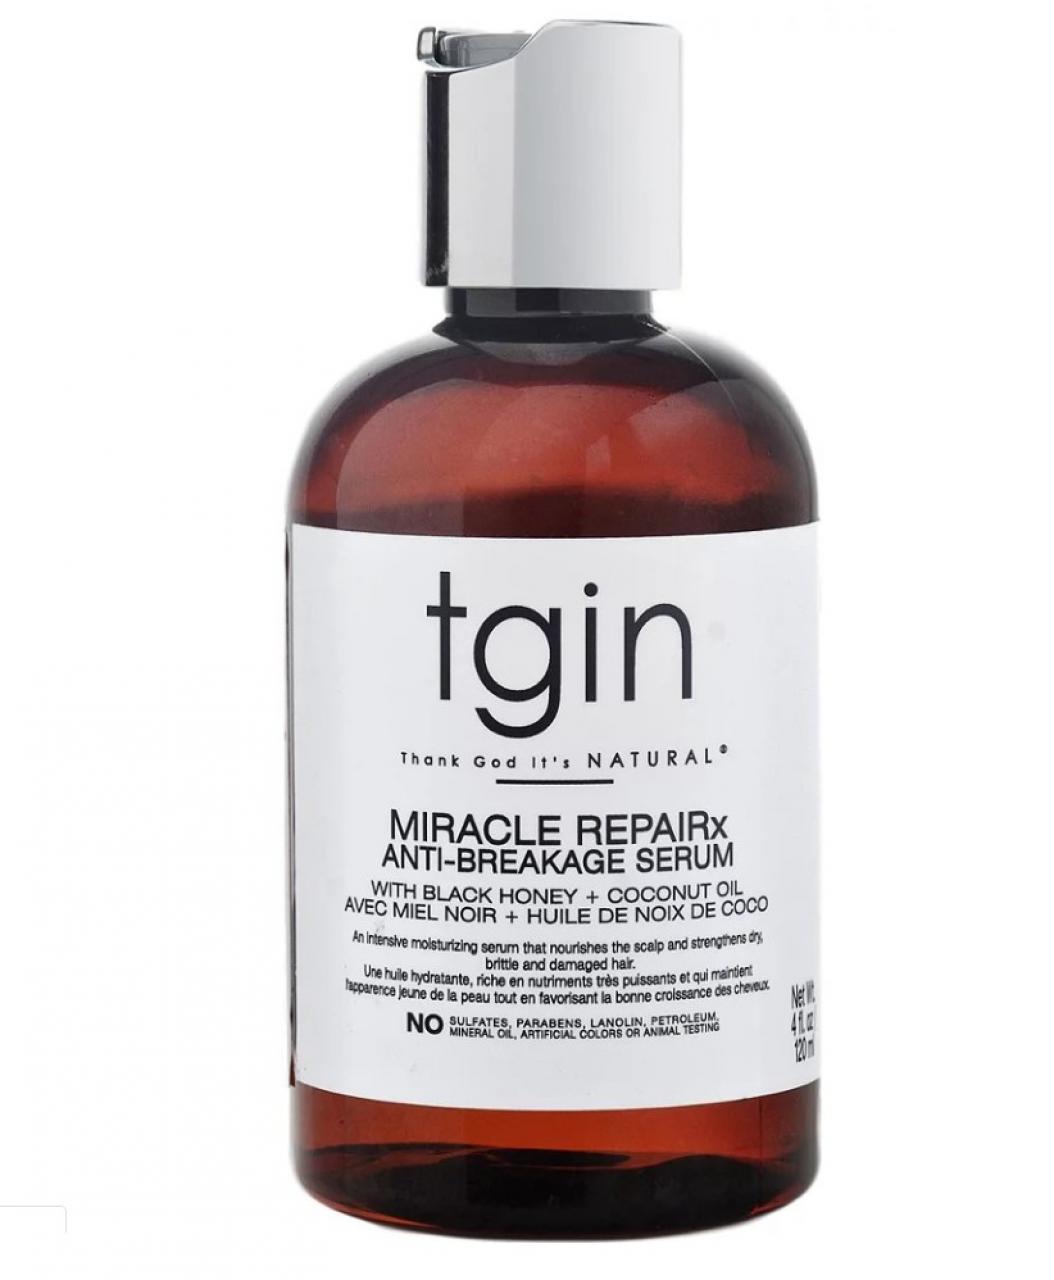 Tgin miracle anti-breakage serum